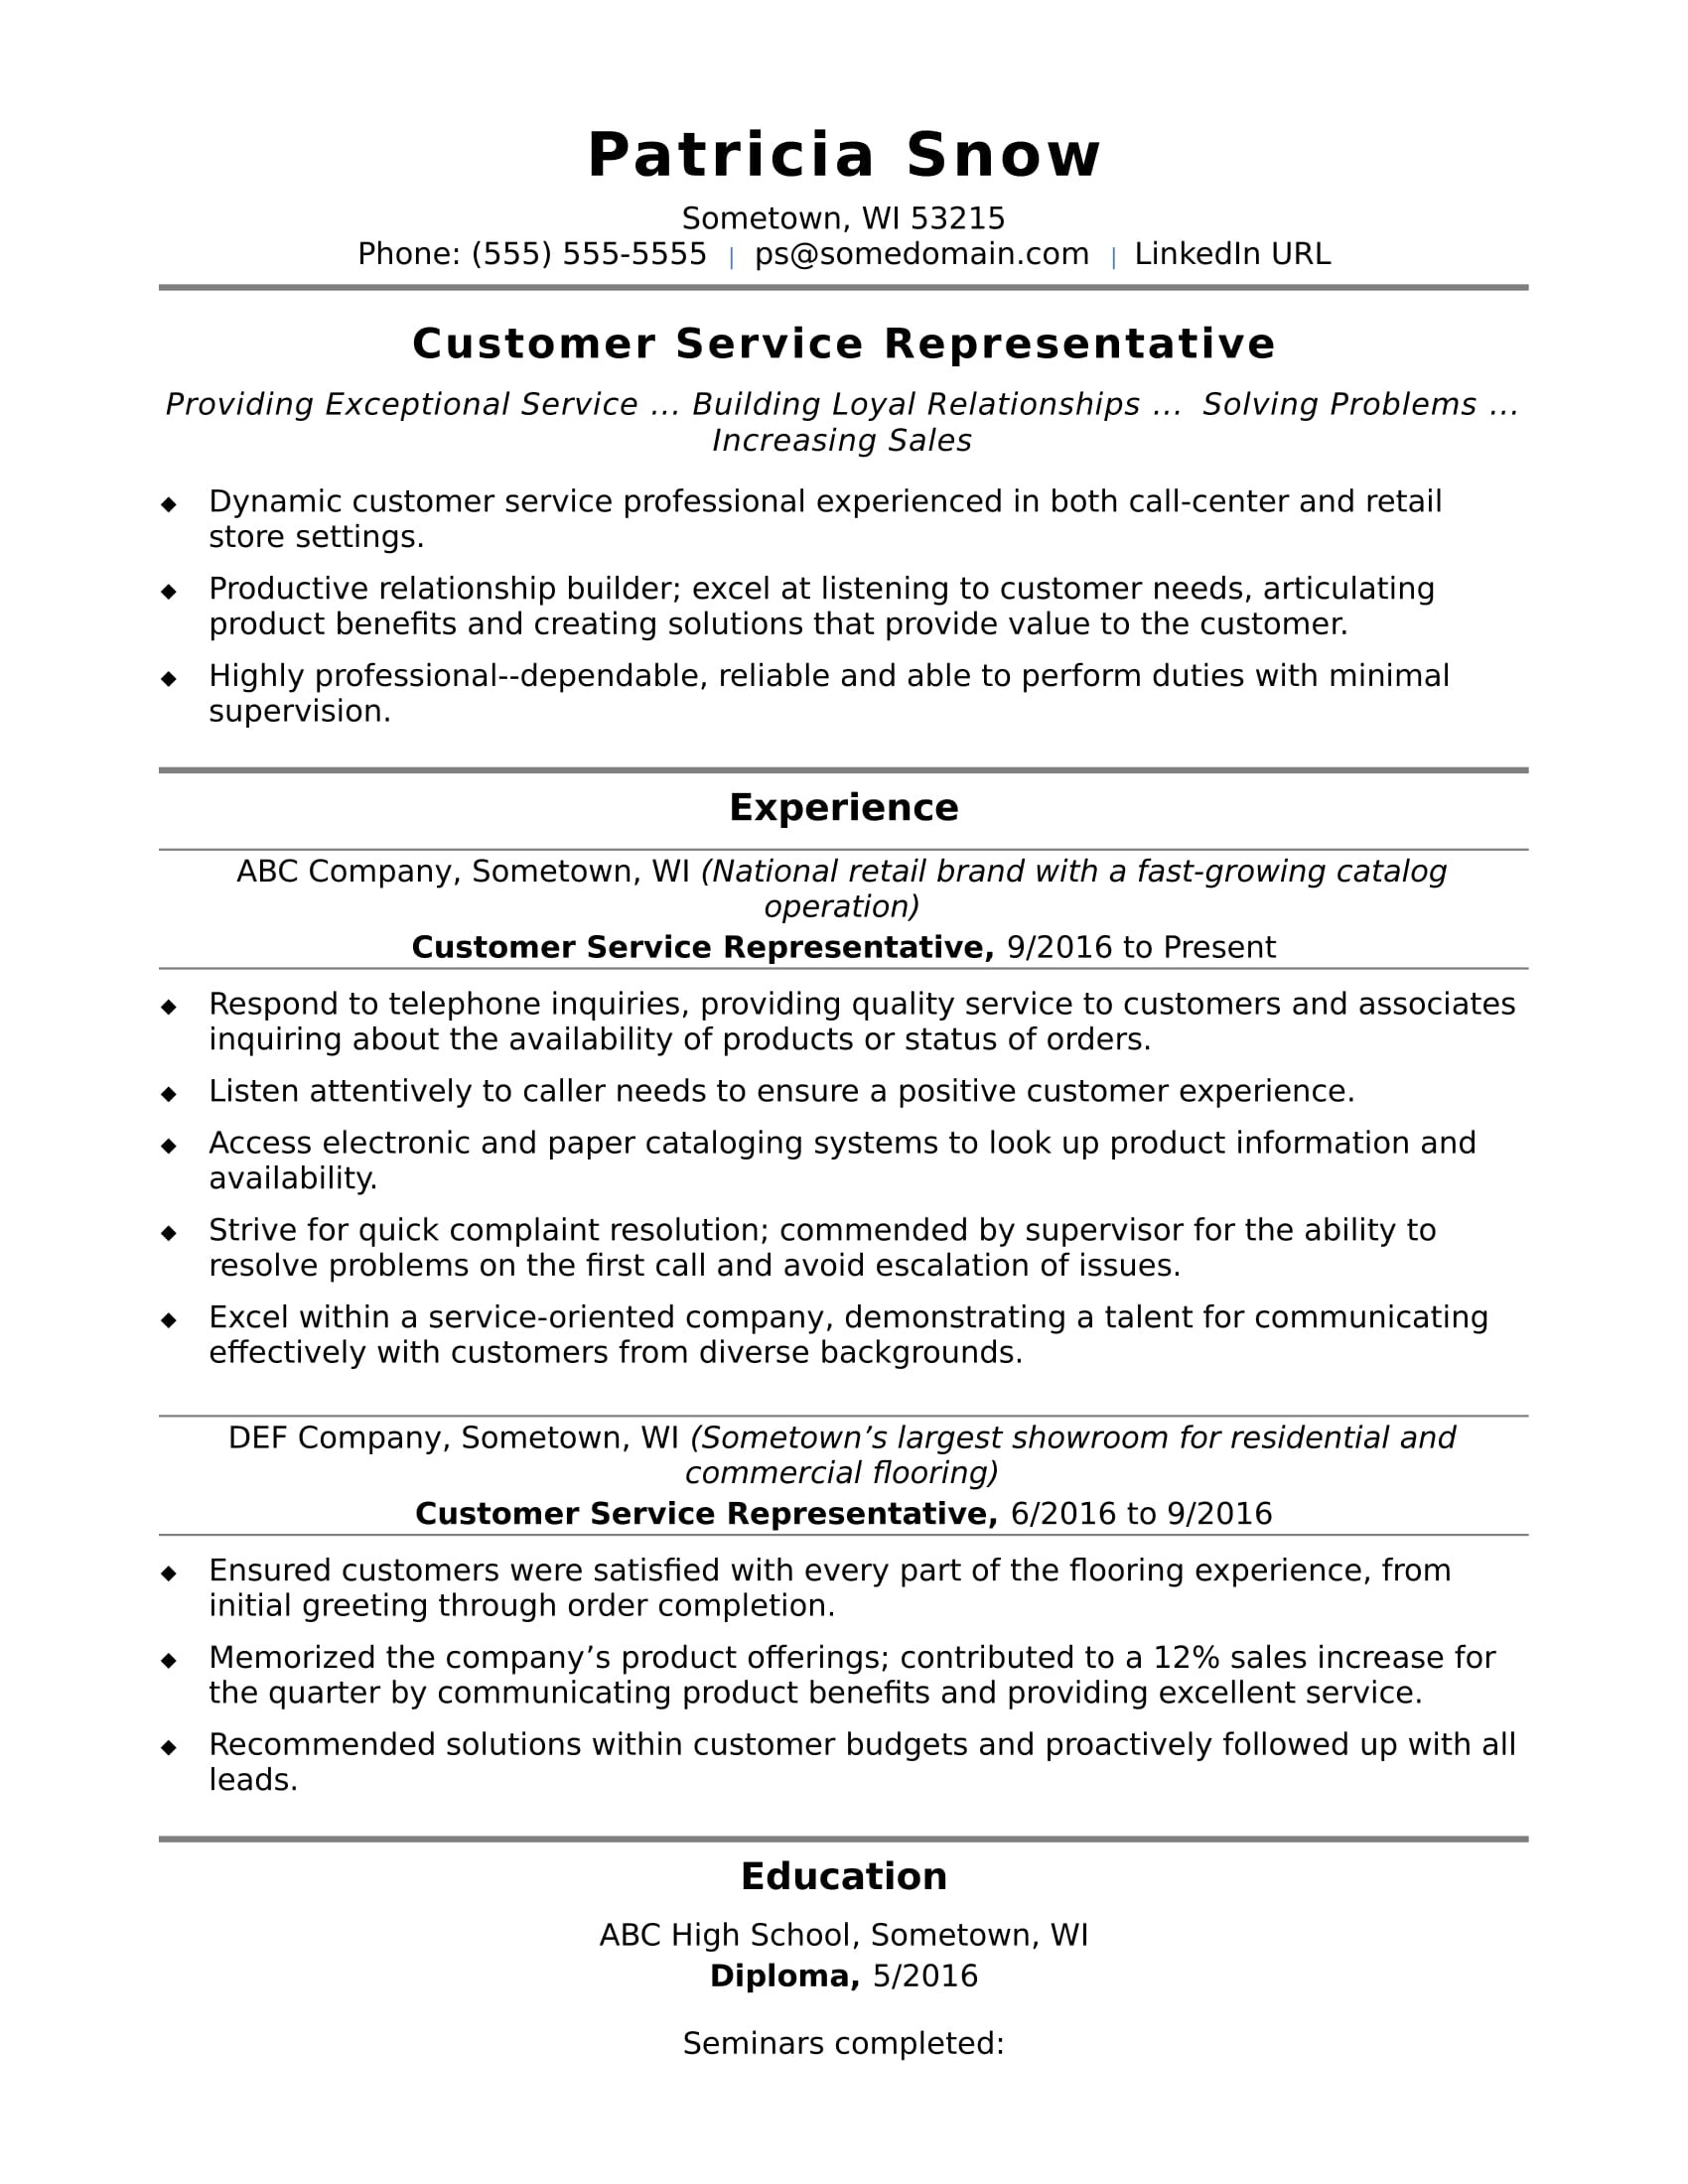 Sample Resume Objectives for Entry Level Retail Entry-level Customer Service Resume Sample Monster.com